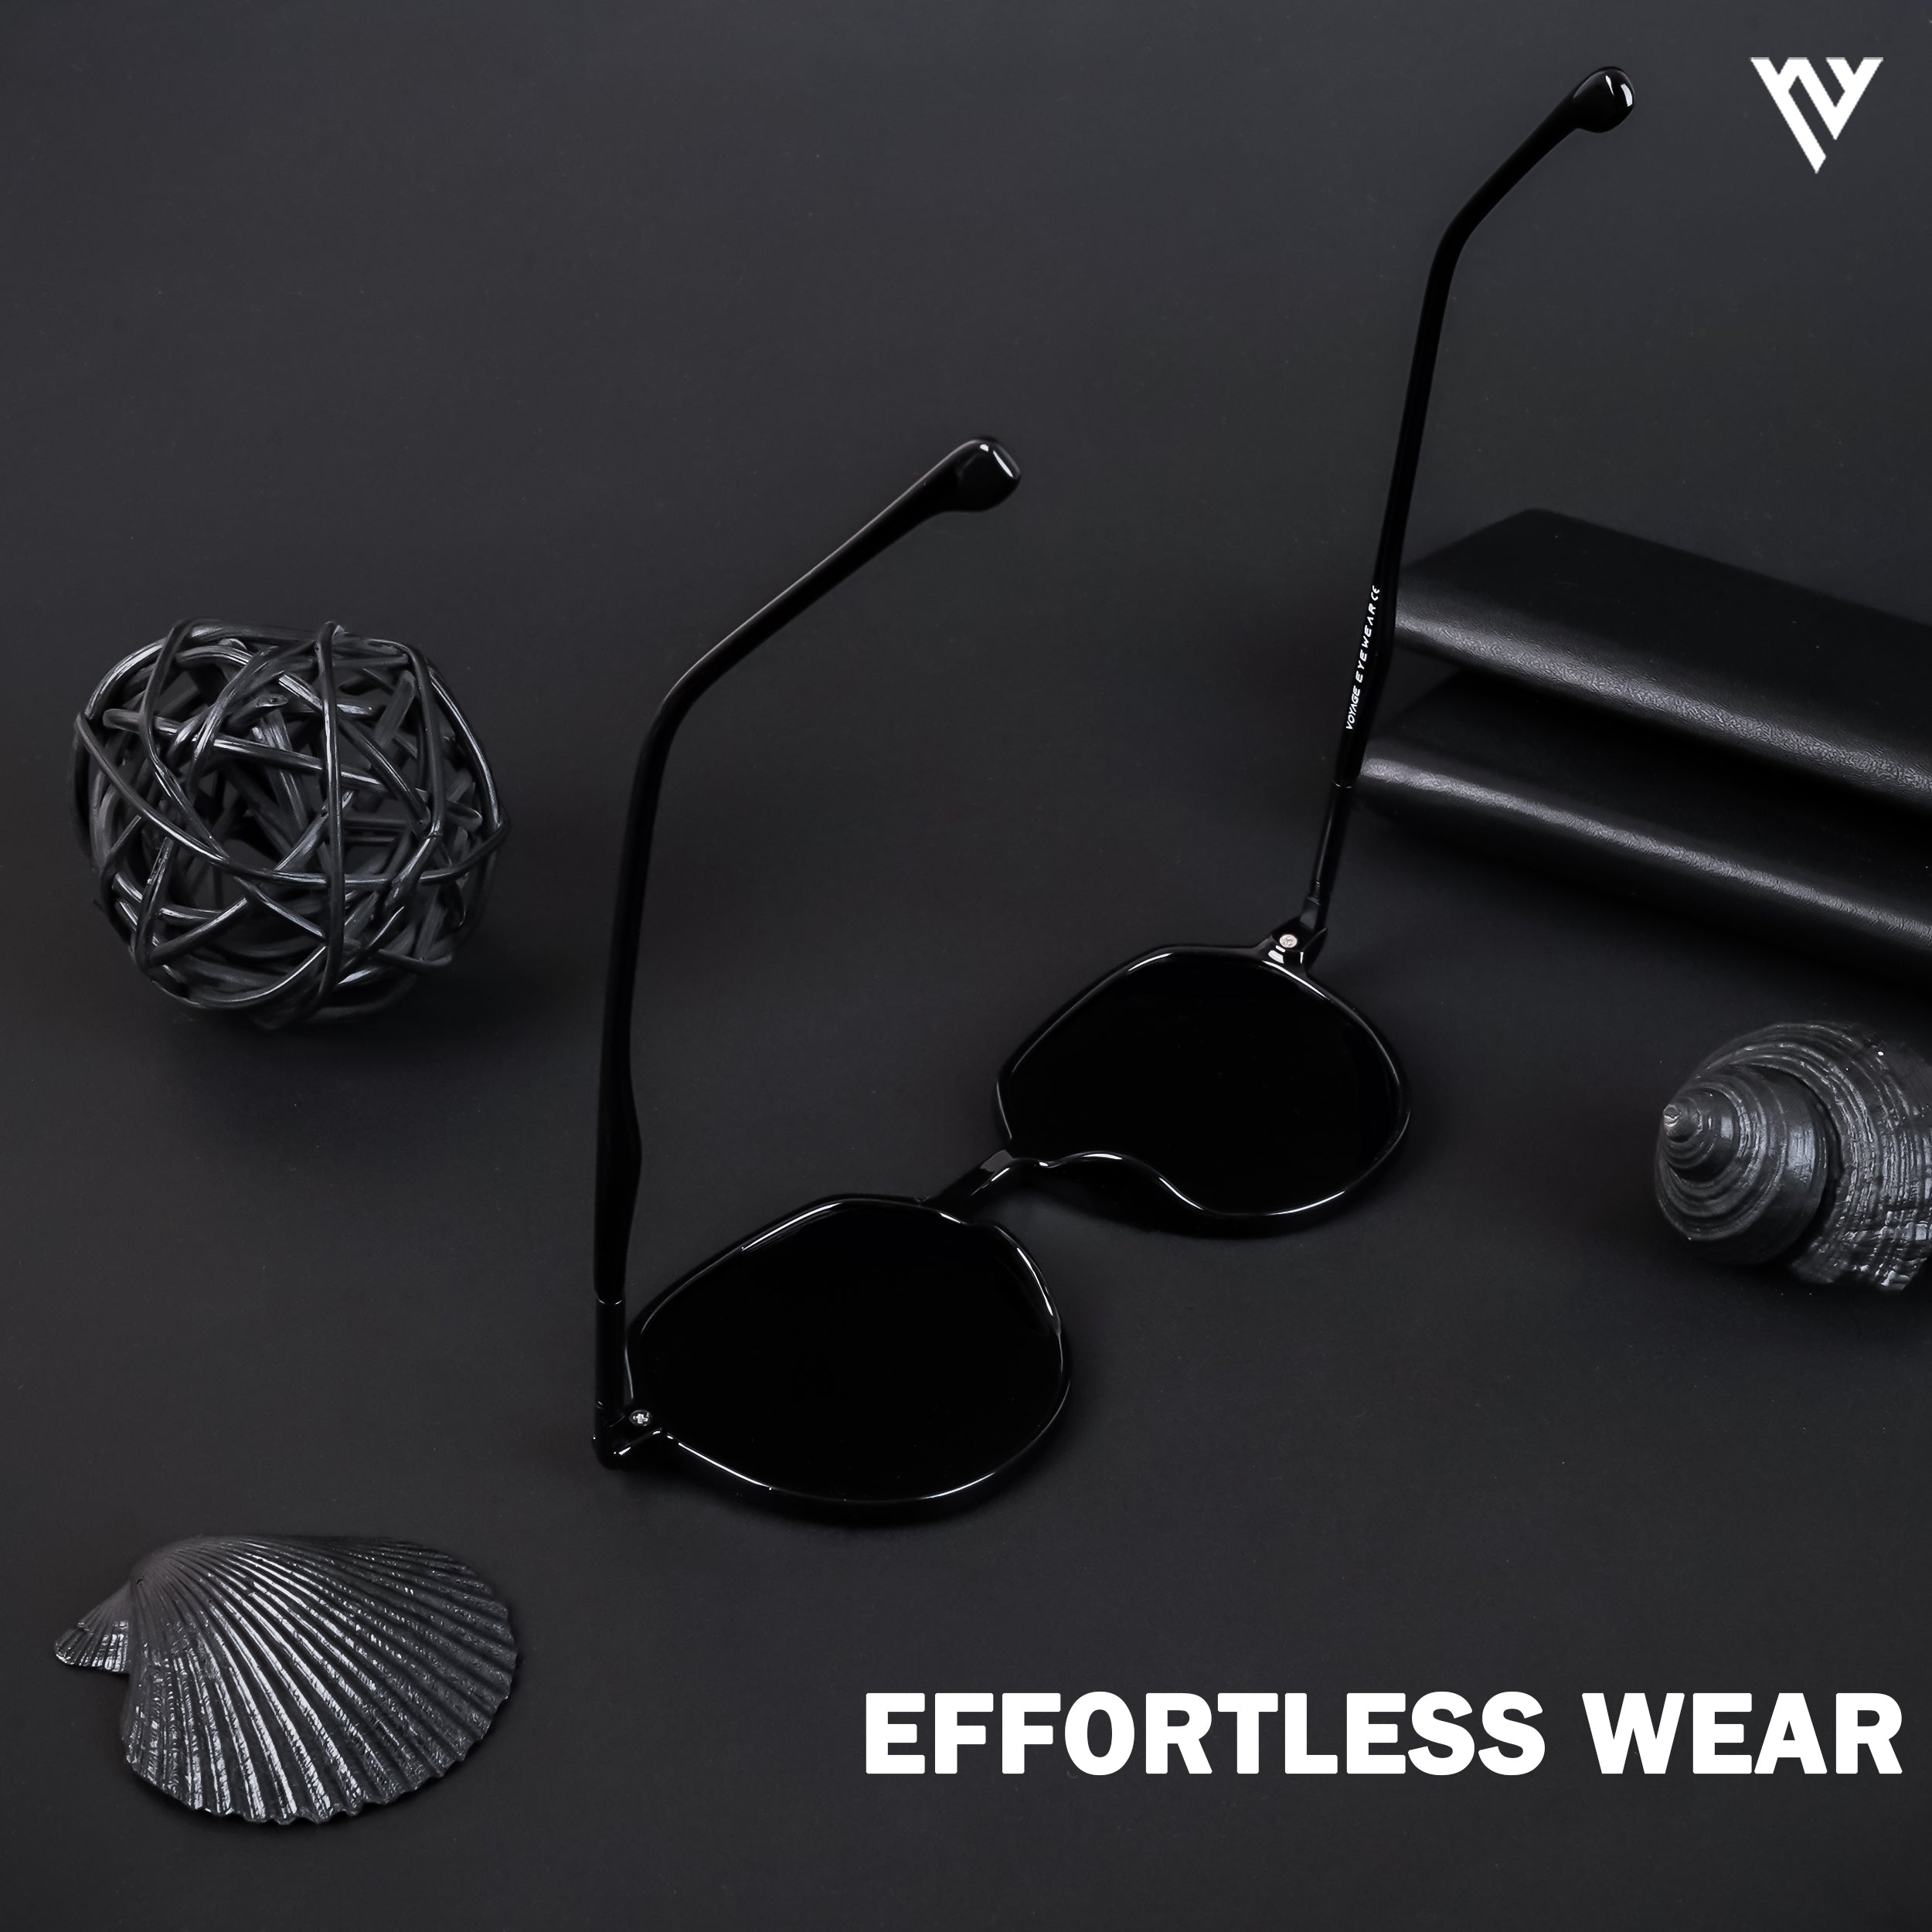 Voyage Exclusive Shine Black Polarized Round Sunglasses for Men & Women - PMG4297